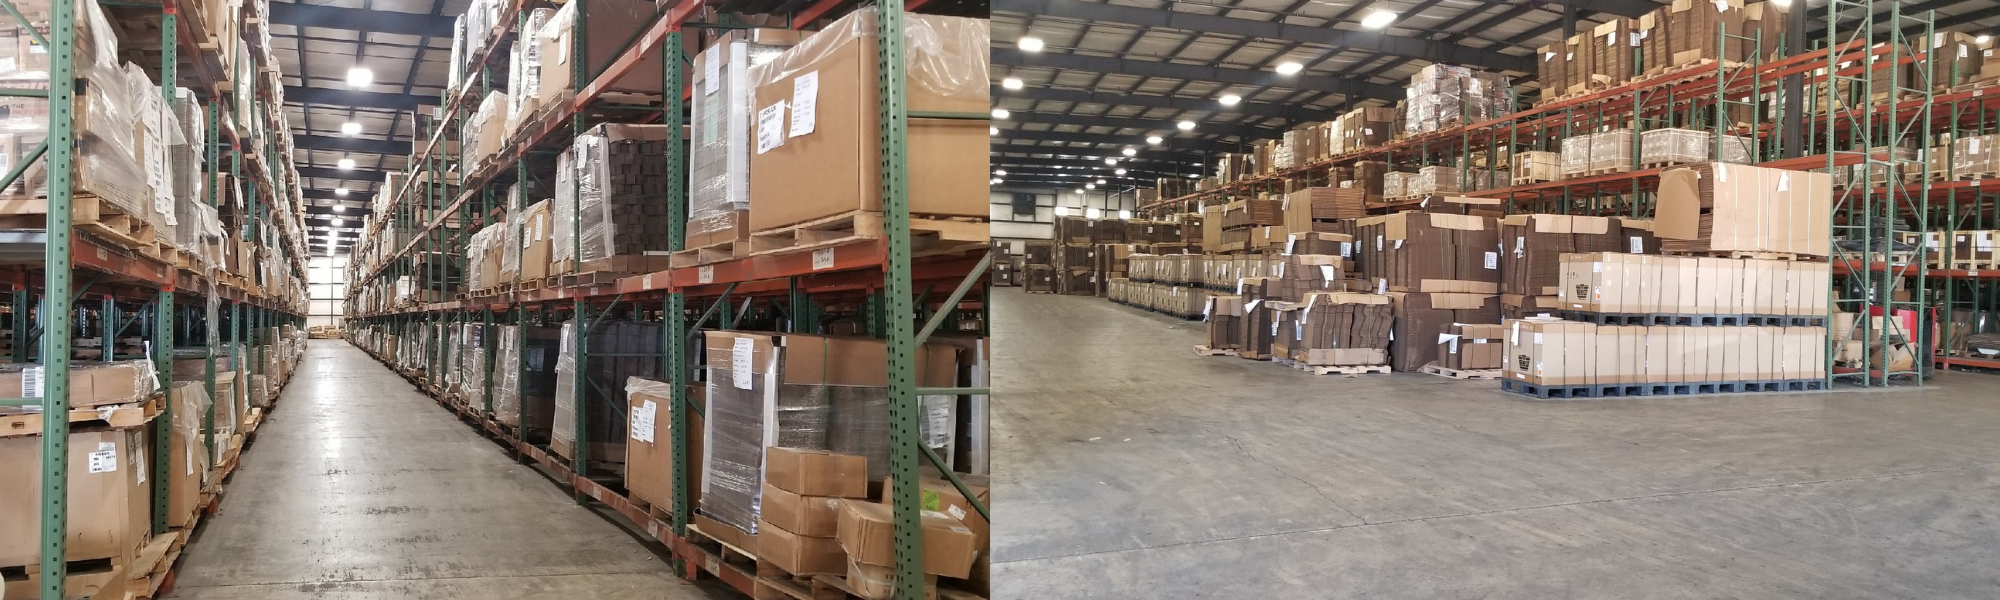 Freight & warehouse